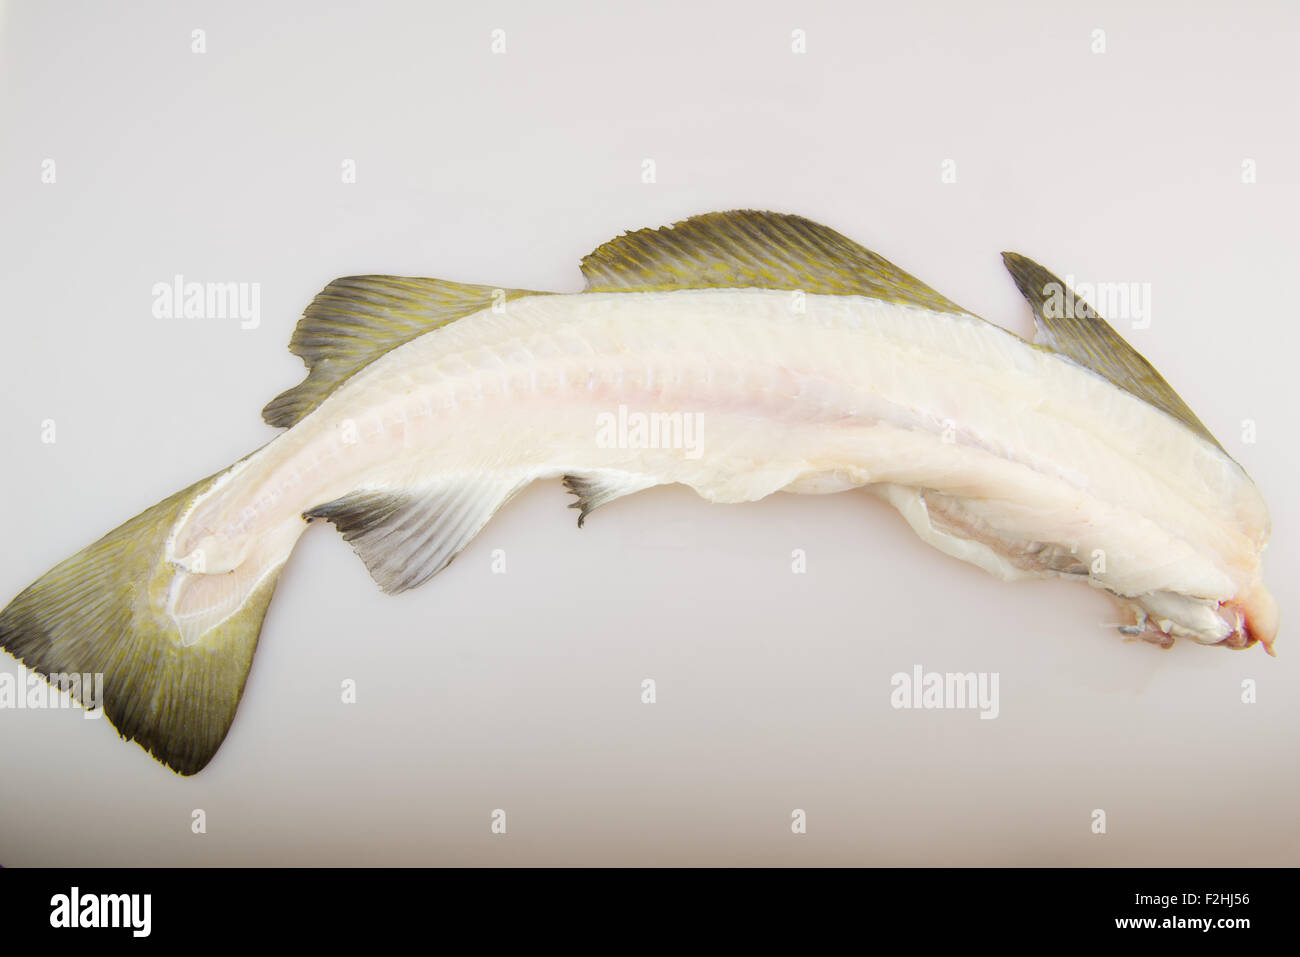 Cod fish skeleton, bones Stock Photo